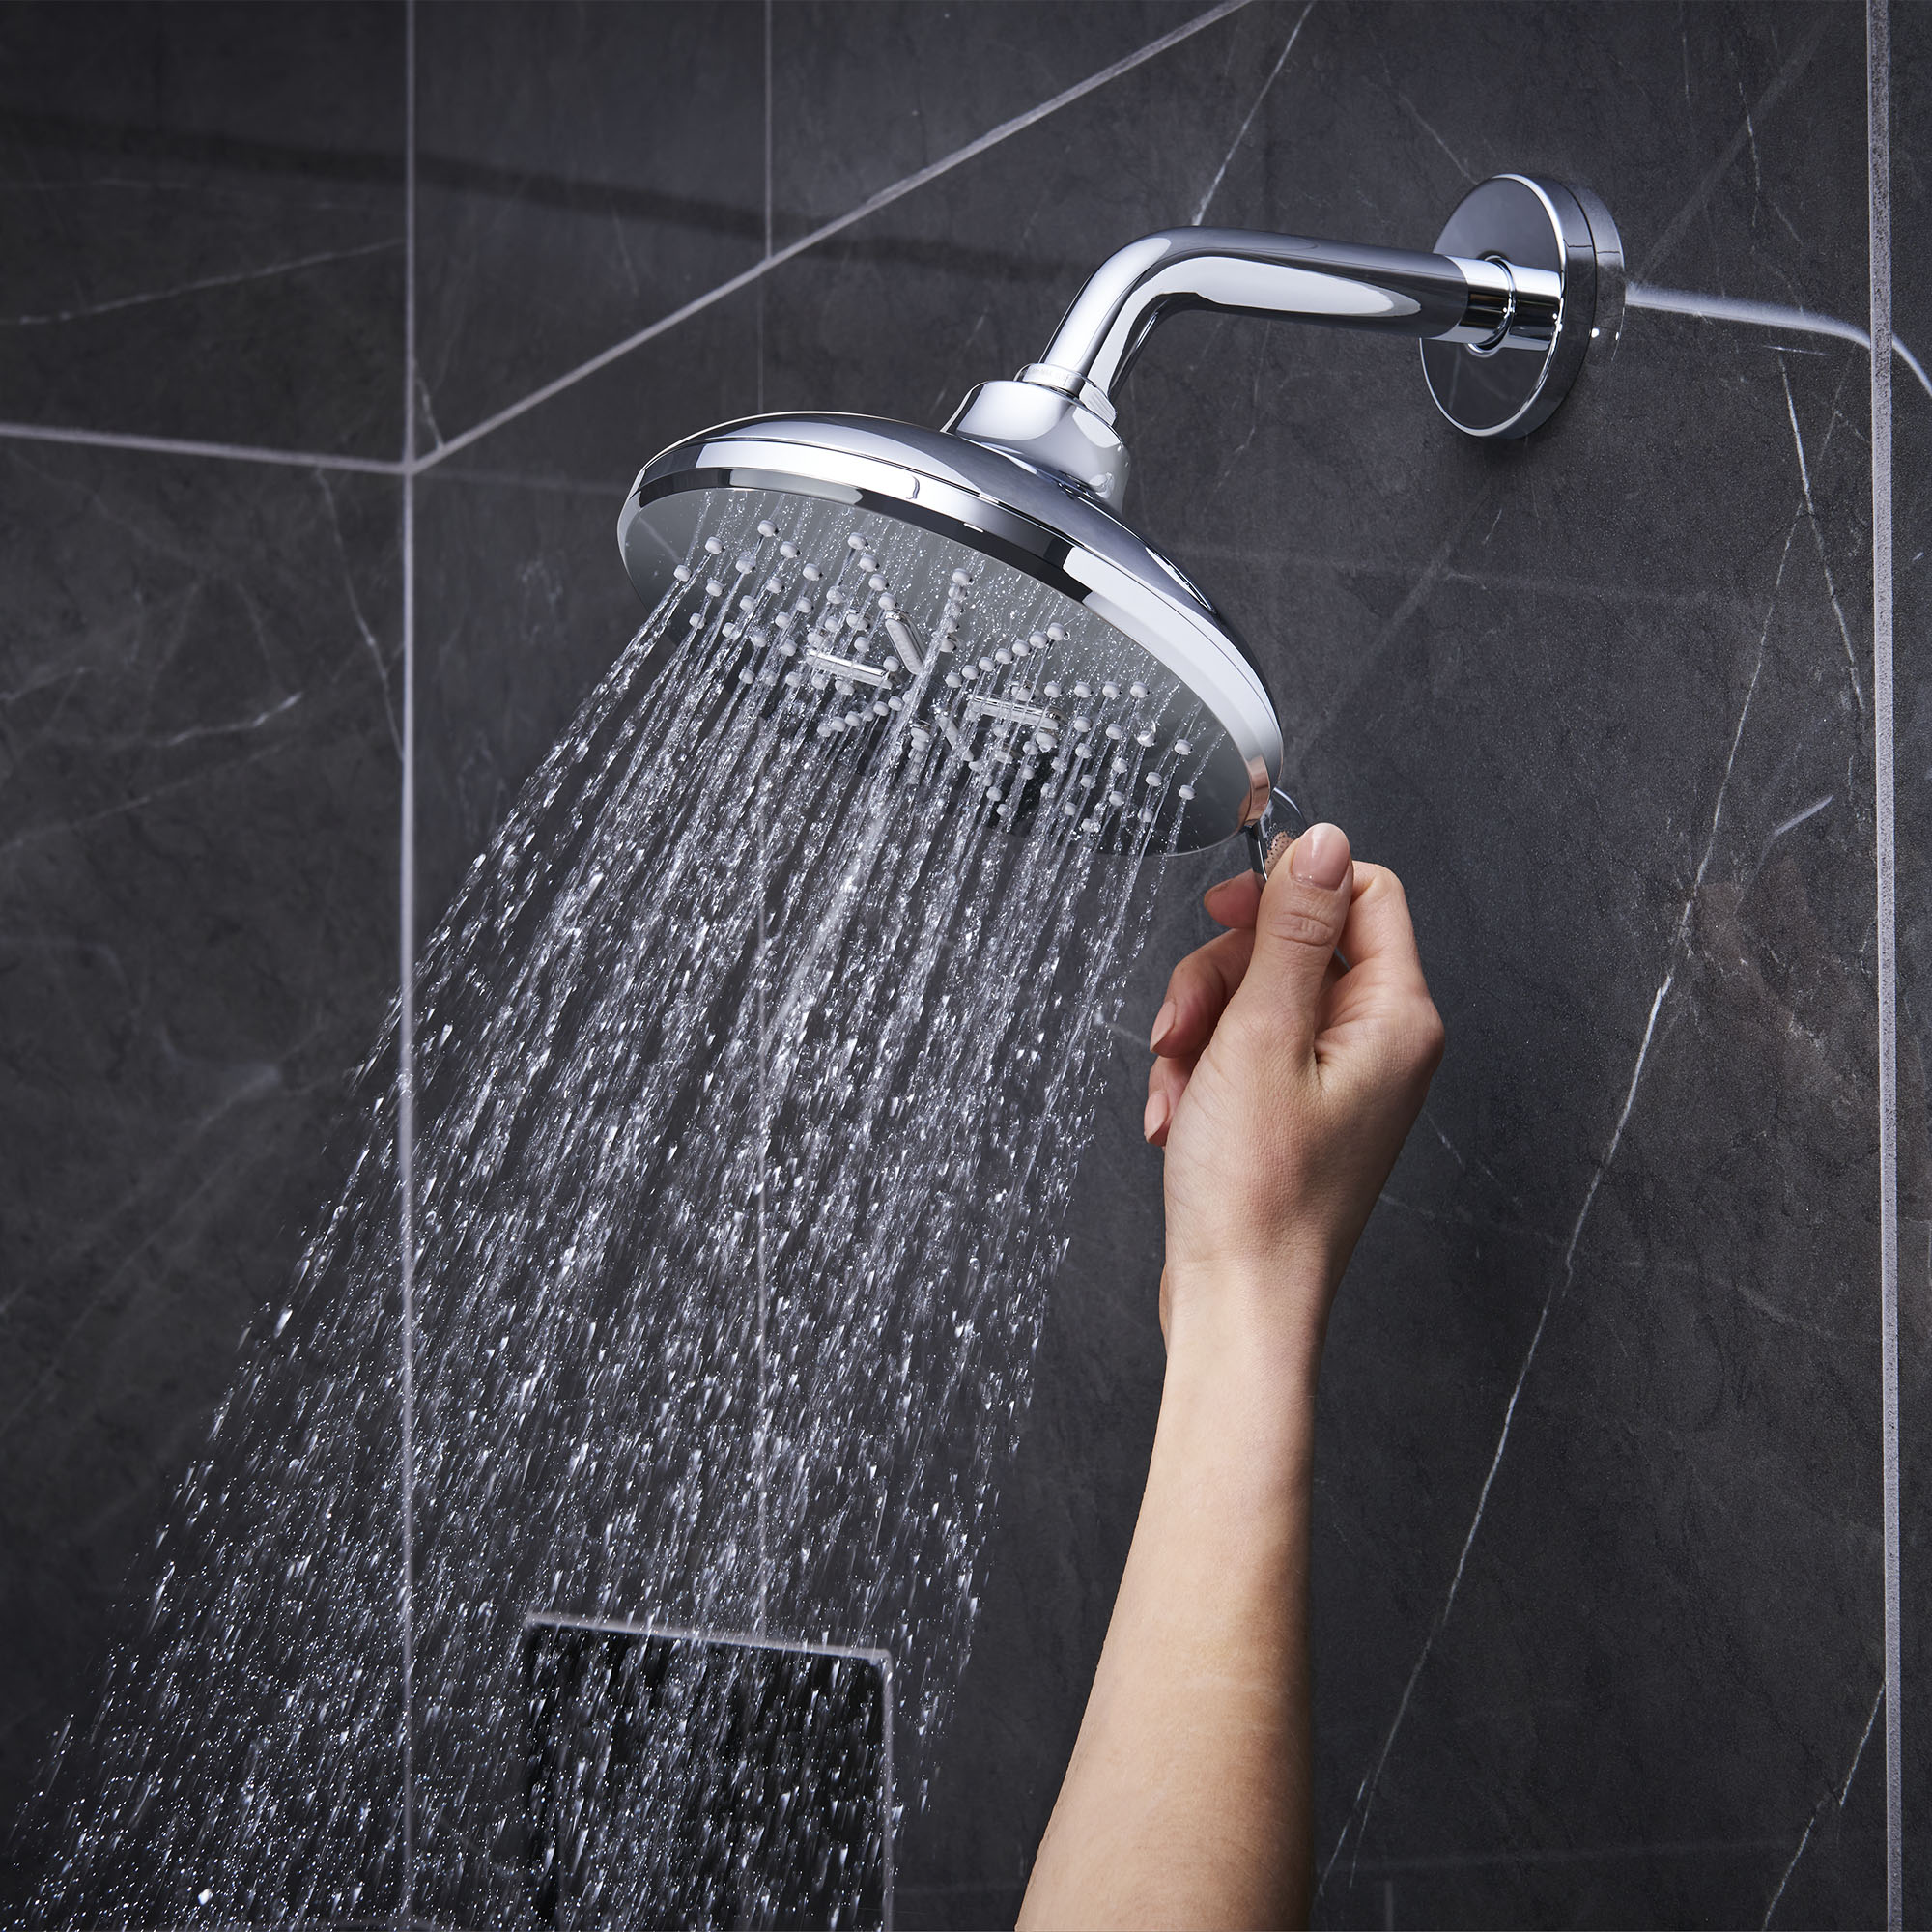 Shower Head, 6-1/2" - 3 Sprays, 1.75 GPM (6.6 L/min)